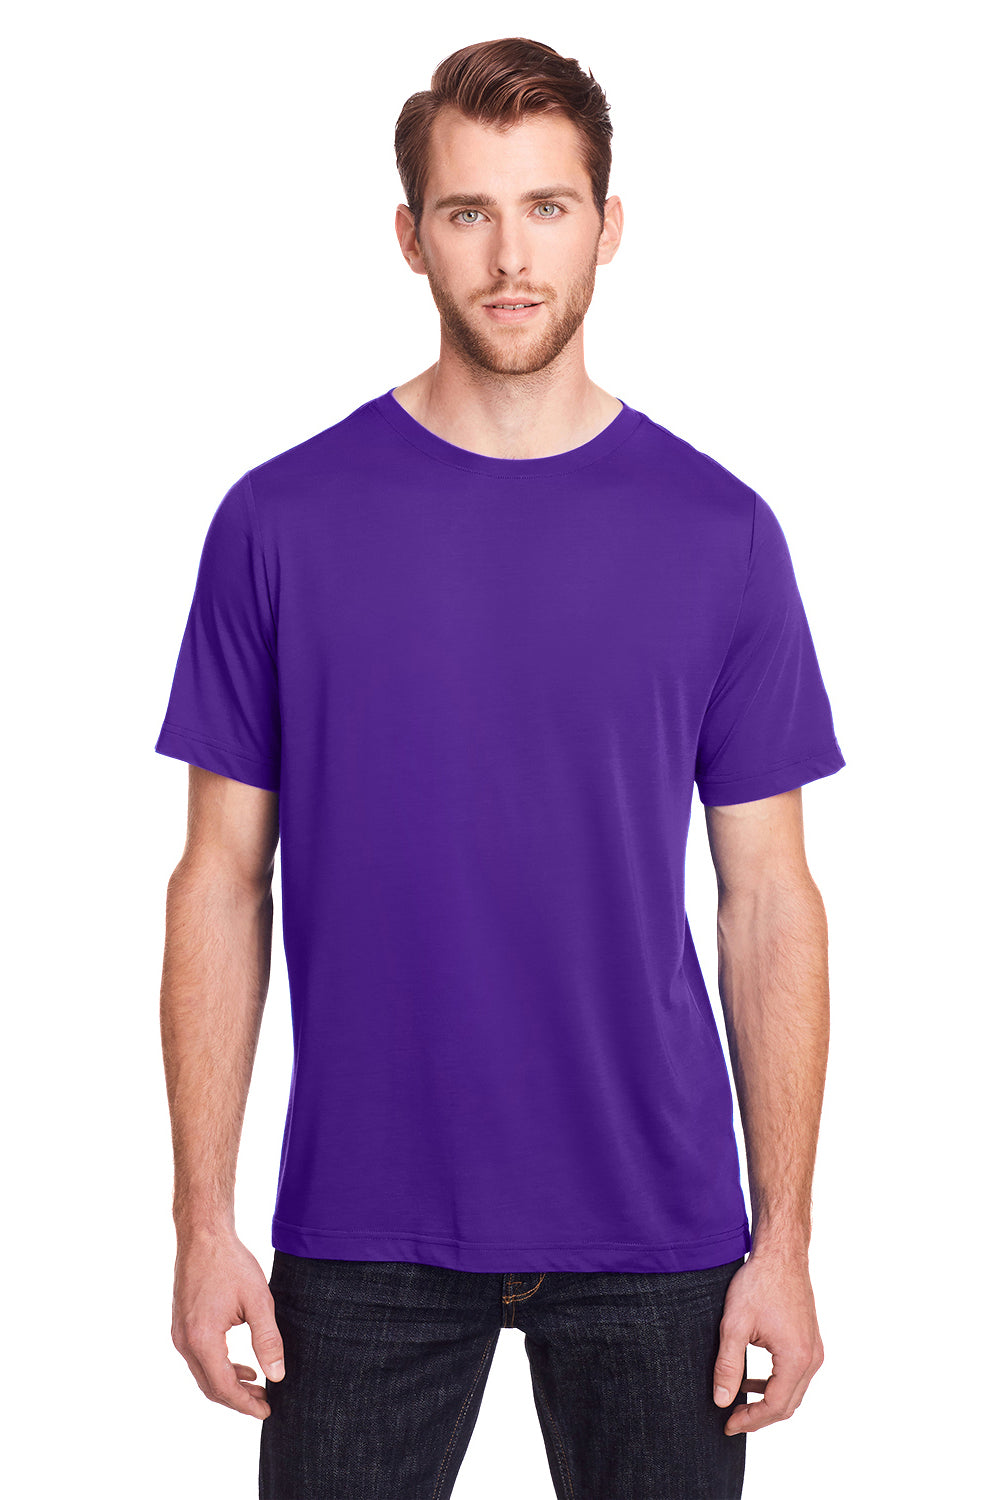 Core 365 CE111 Mens Fusion ChromaSoft Performance Moisture Wicking Short Sleeve Crewneck T-Shirt Purple Front